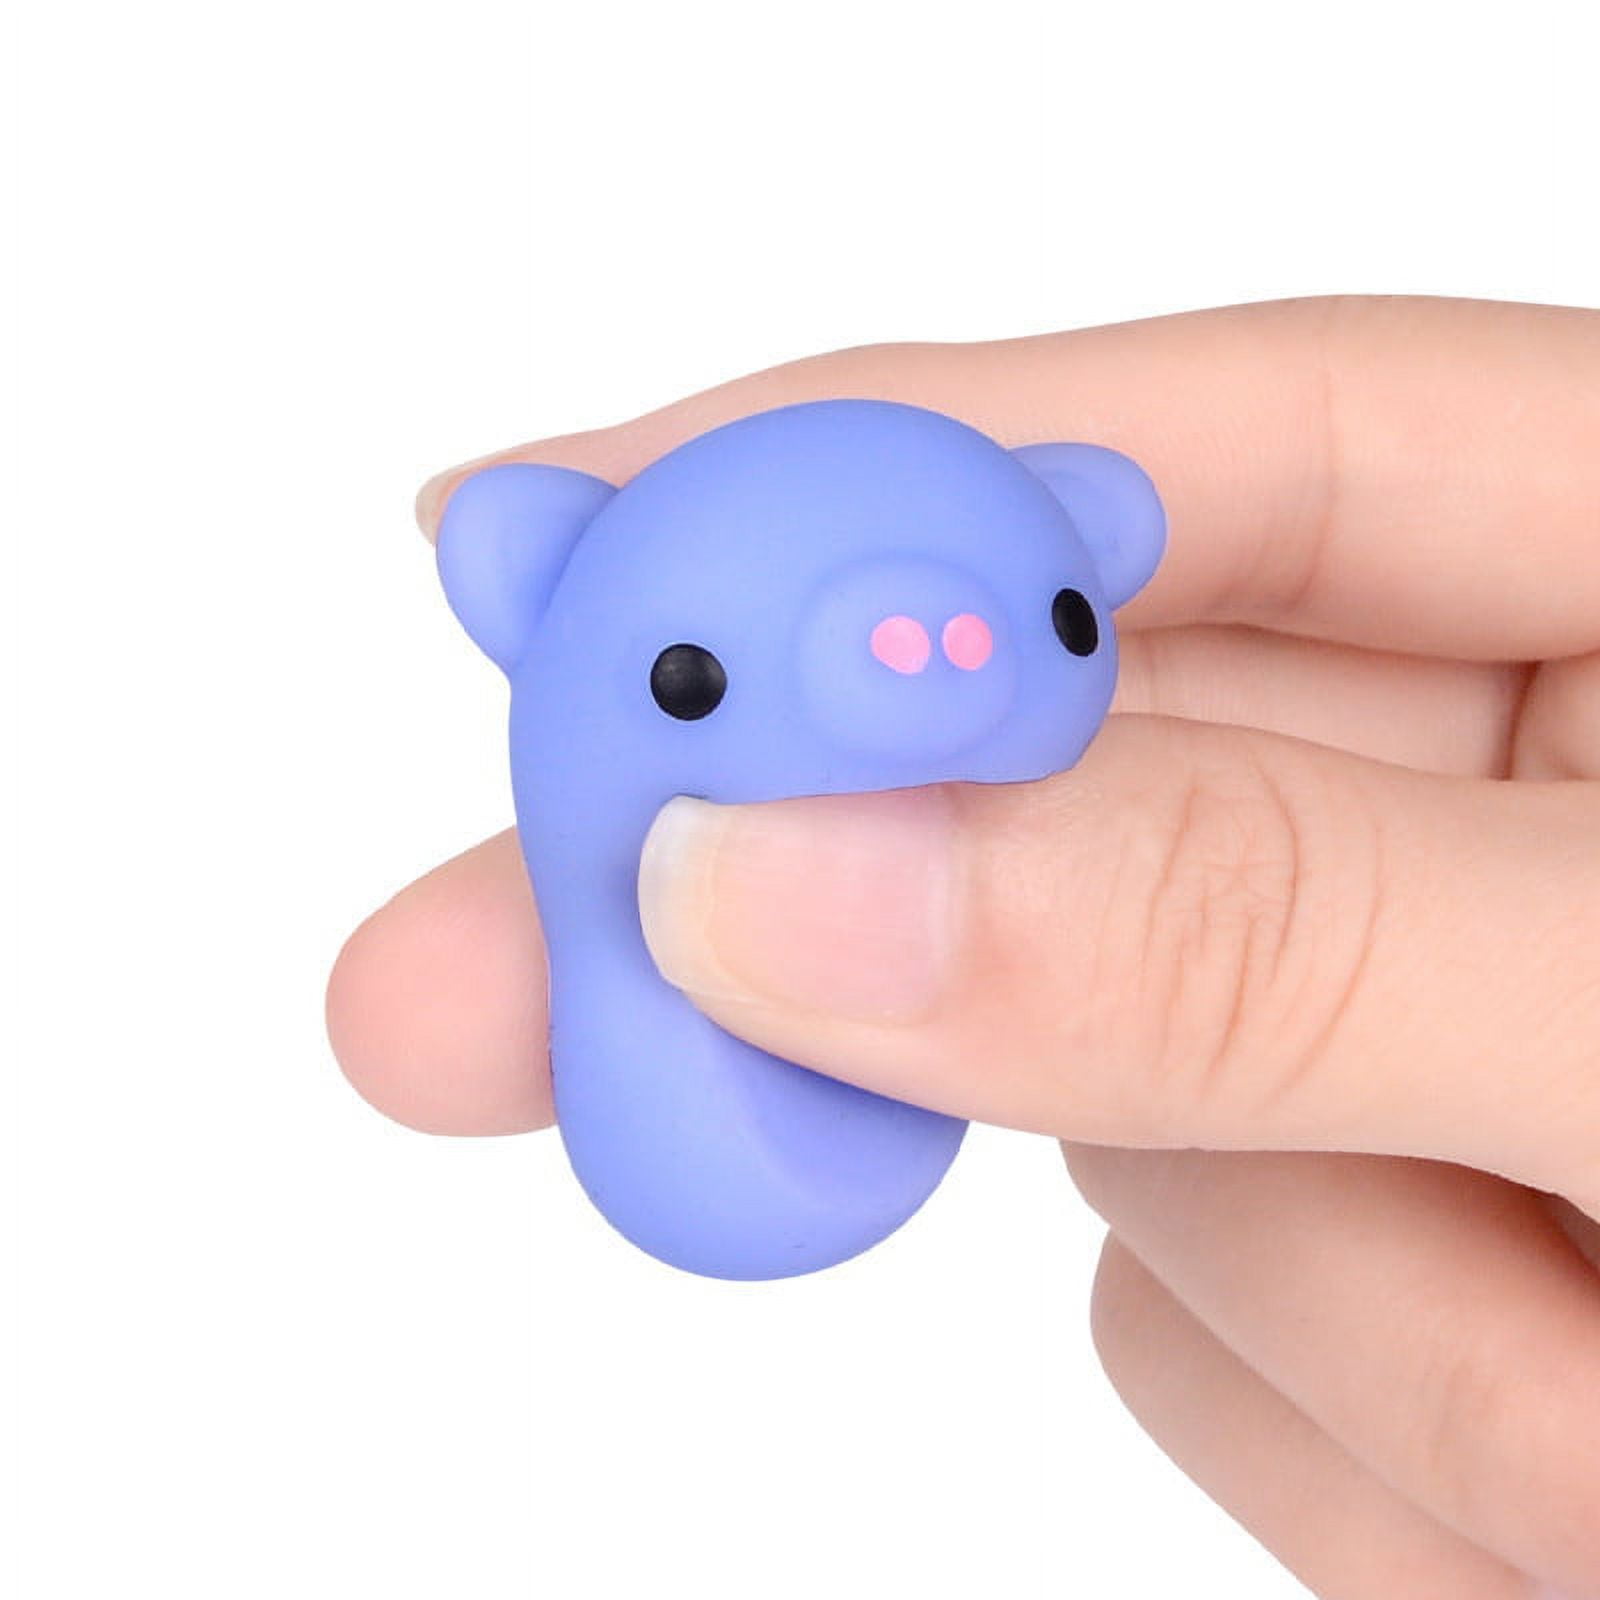 50x Cute Mini Animal Squishies Kawaii Mochi Squeeze Toys Stretch Stress  Squishy